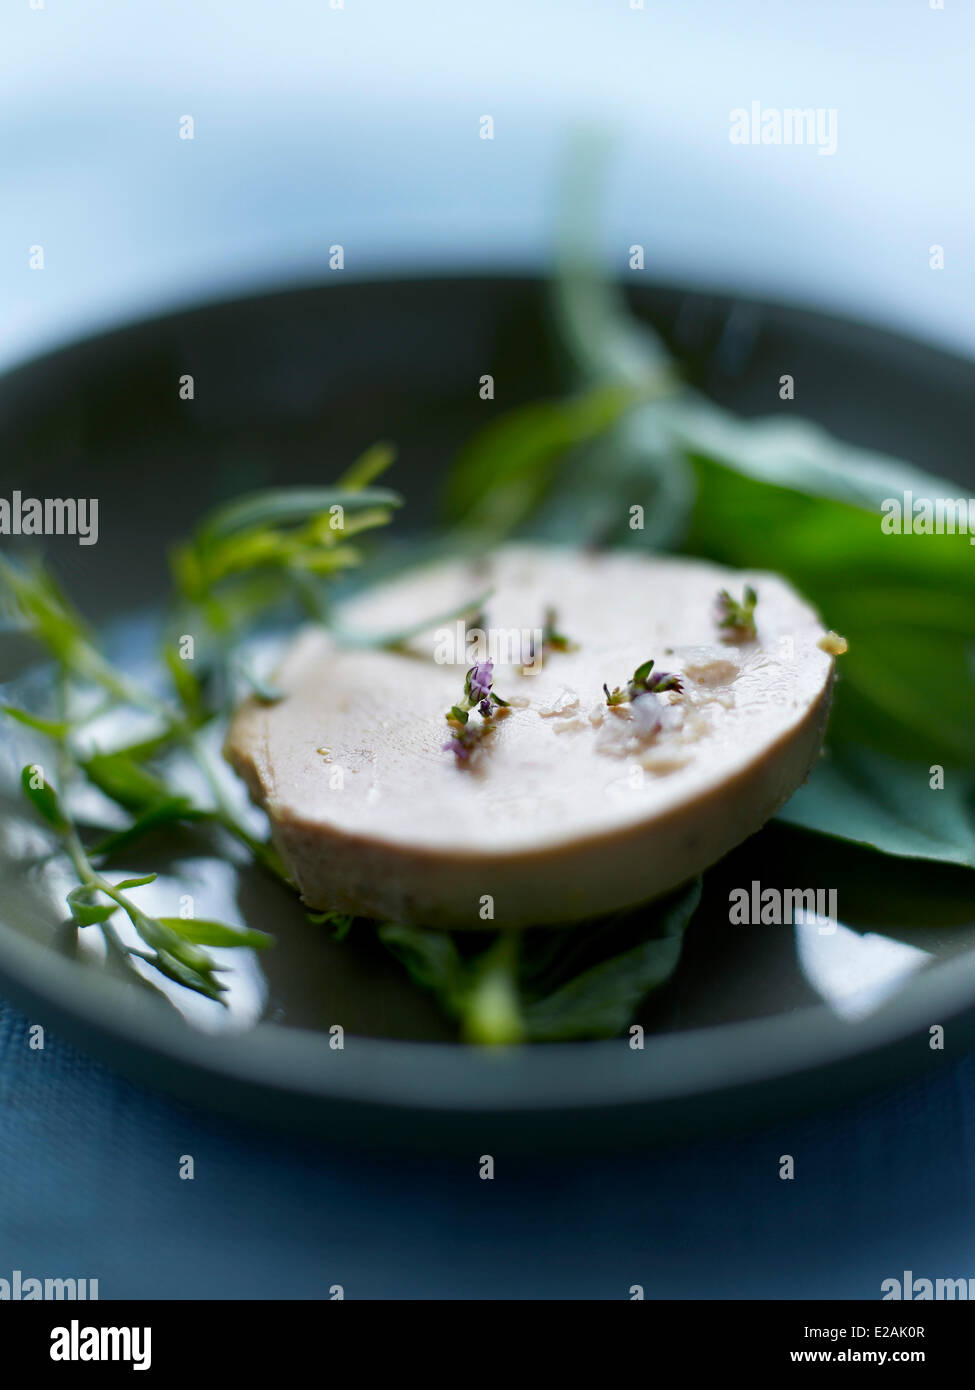 France, Pyrenees Atlantiques, Domezain Berraute, feature: A profession of liver, slice of foie gras Stock Photo